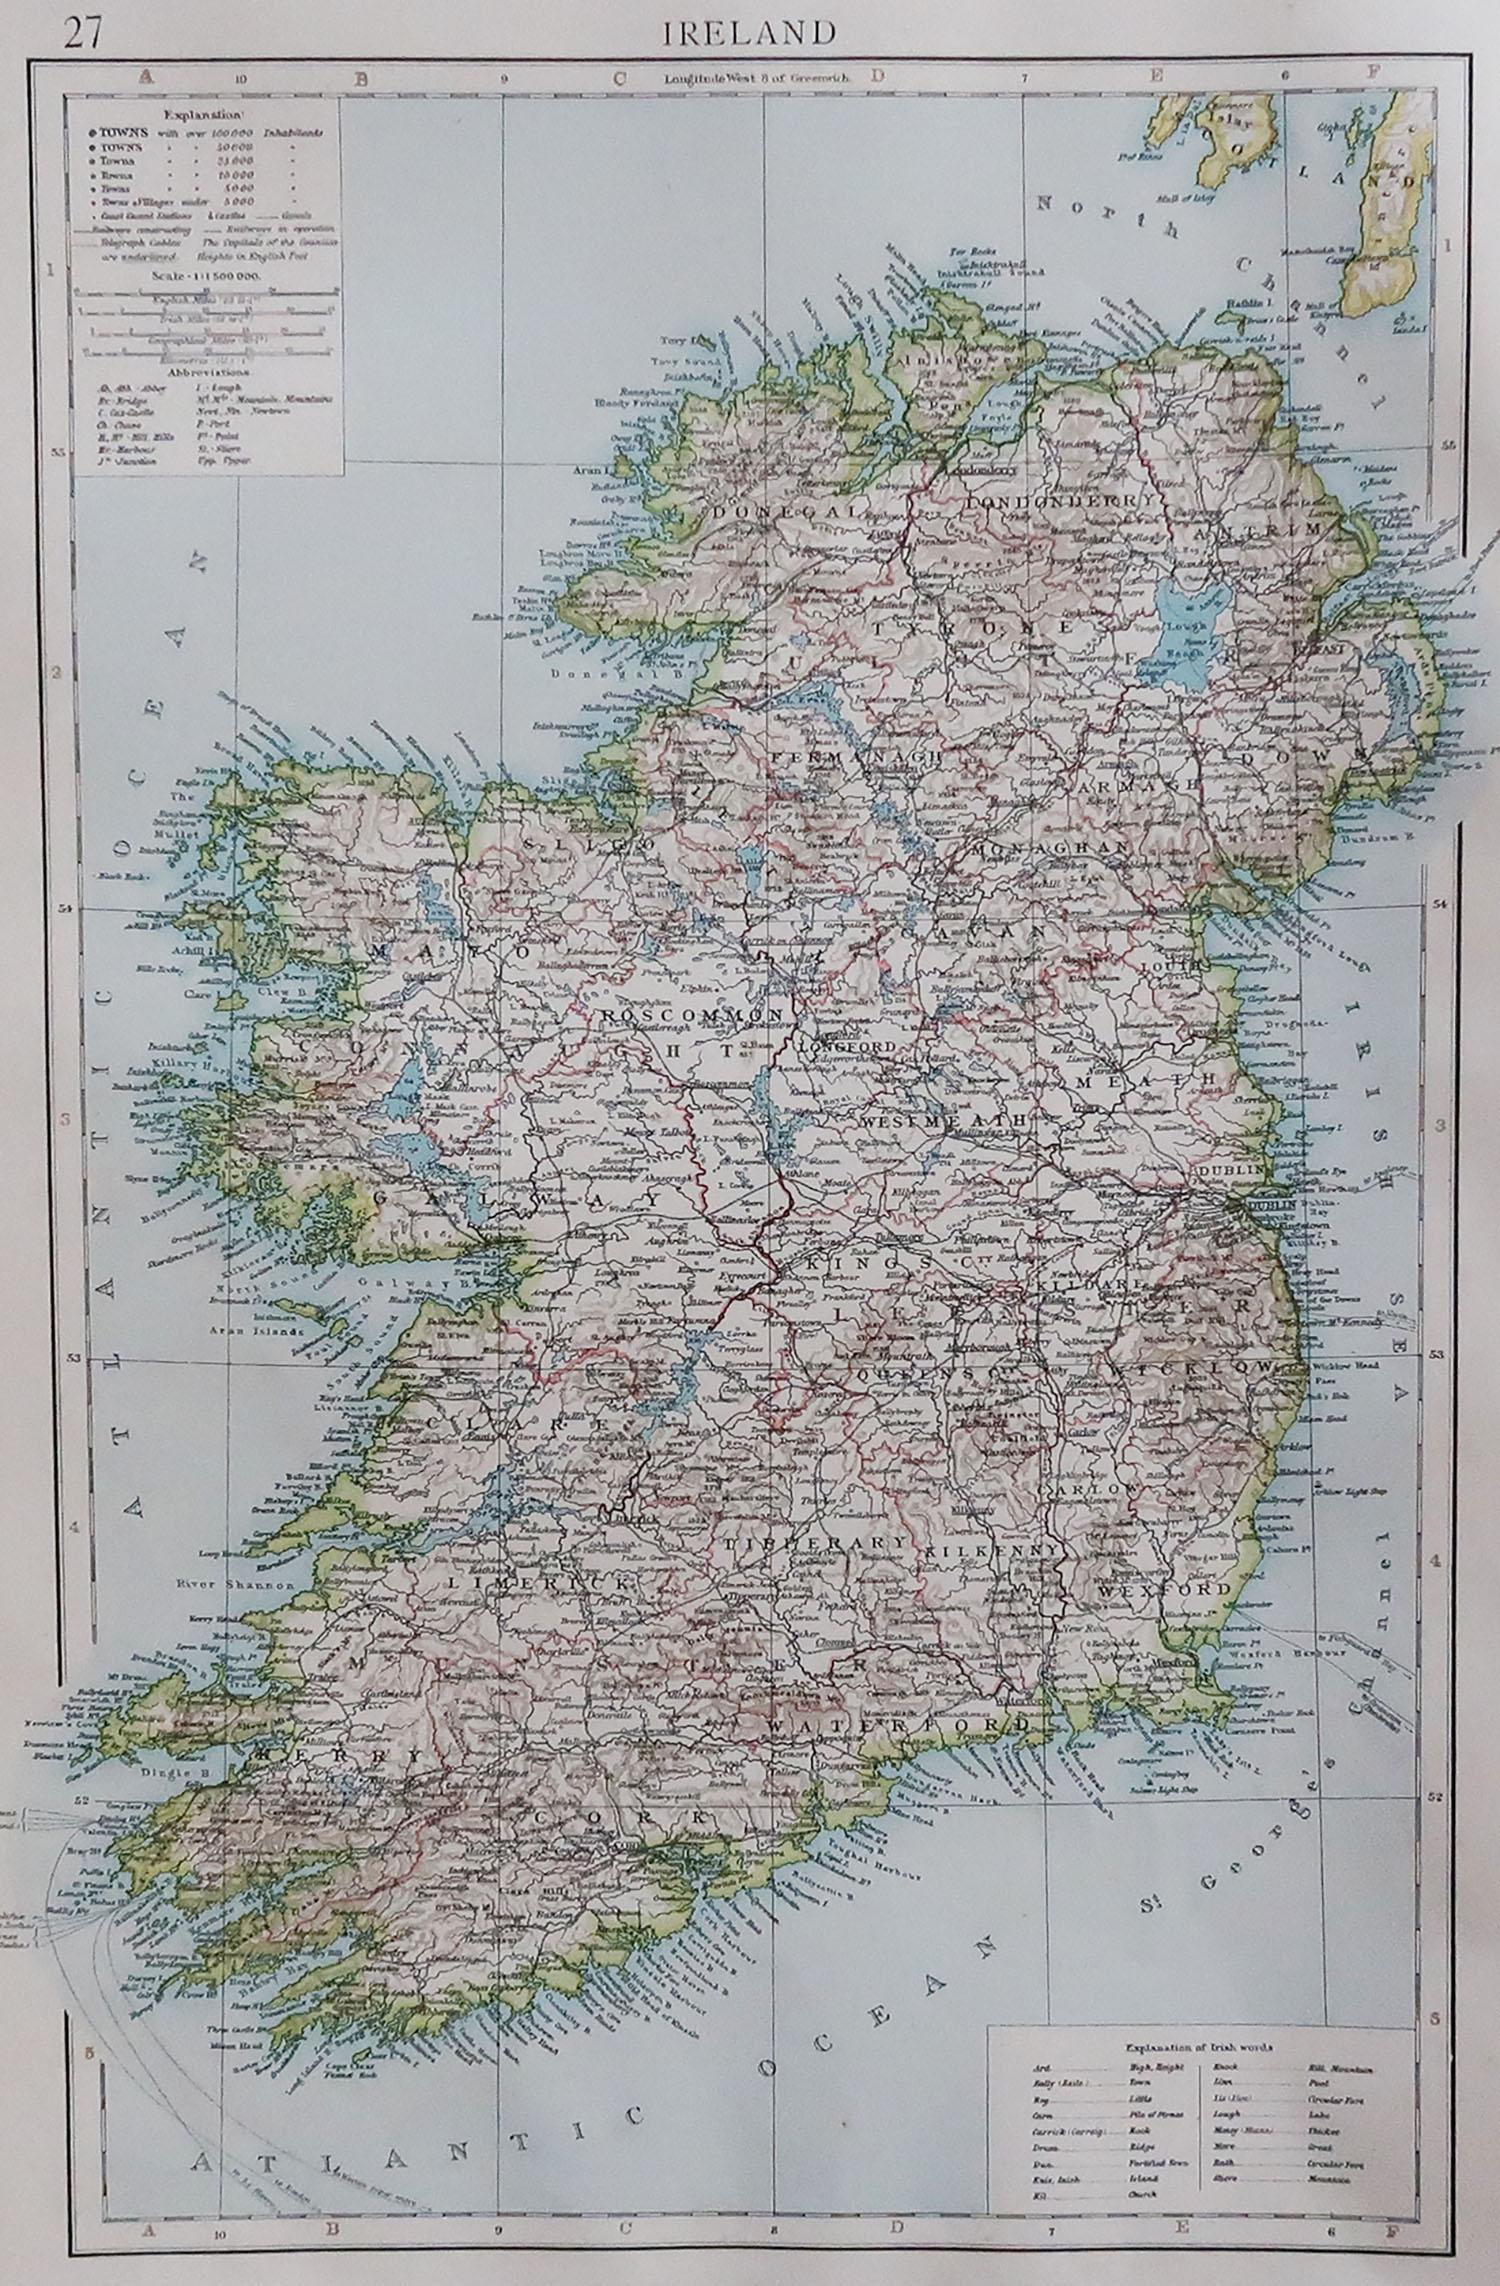 Great map of Ireland

Lithograph. Original color. 

Published by Bartholomew, Edinburgh. C.1900

Unframed.












